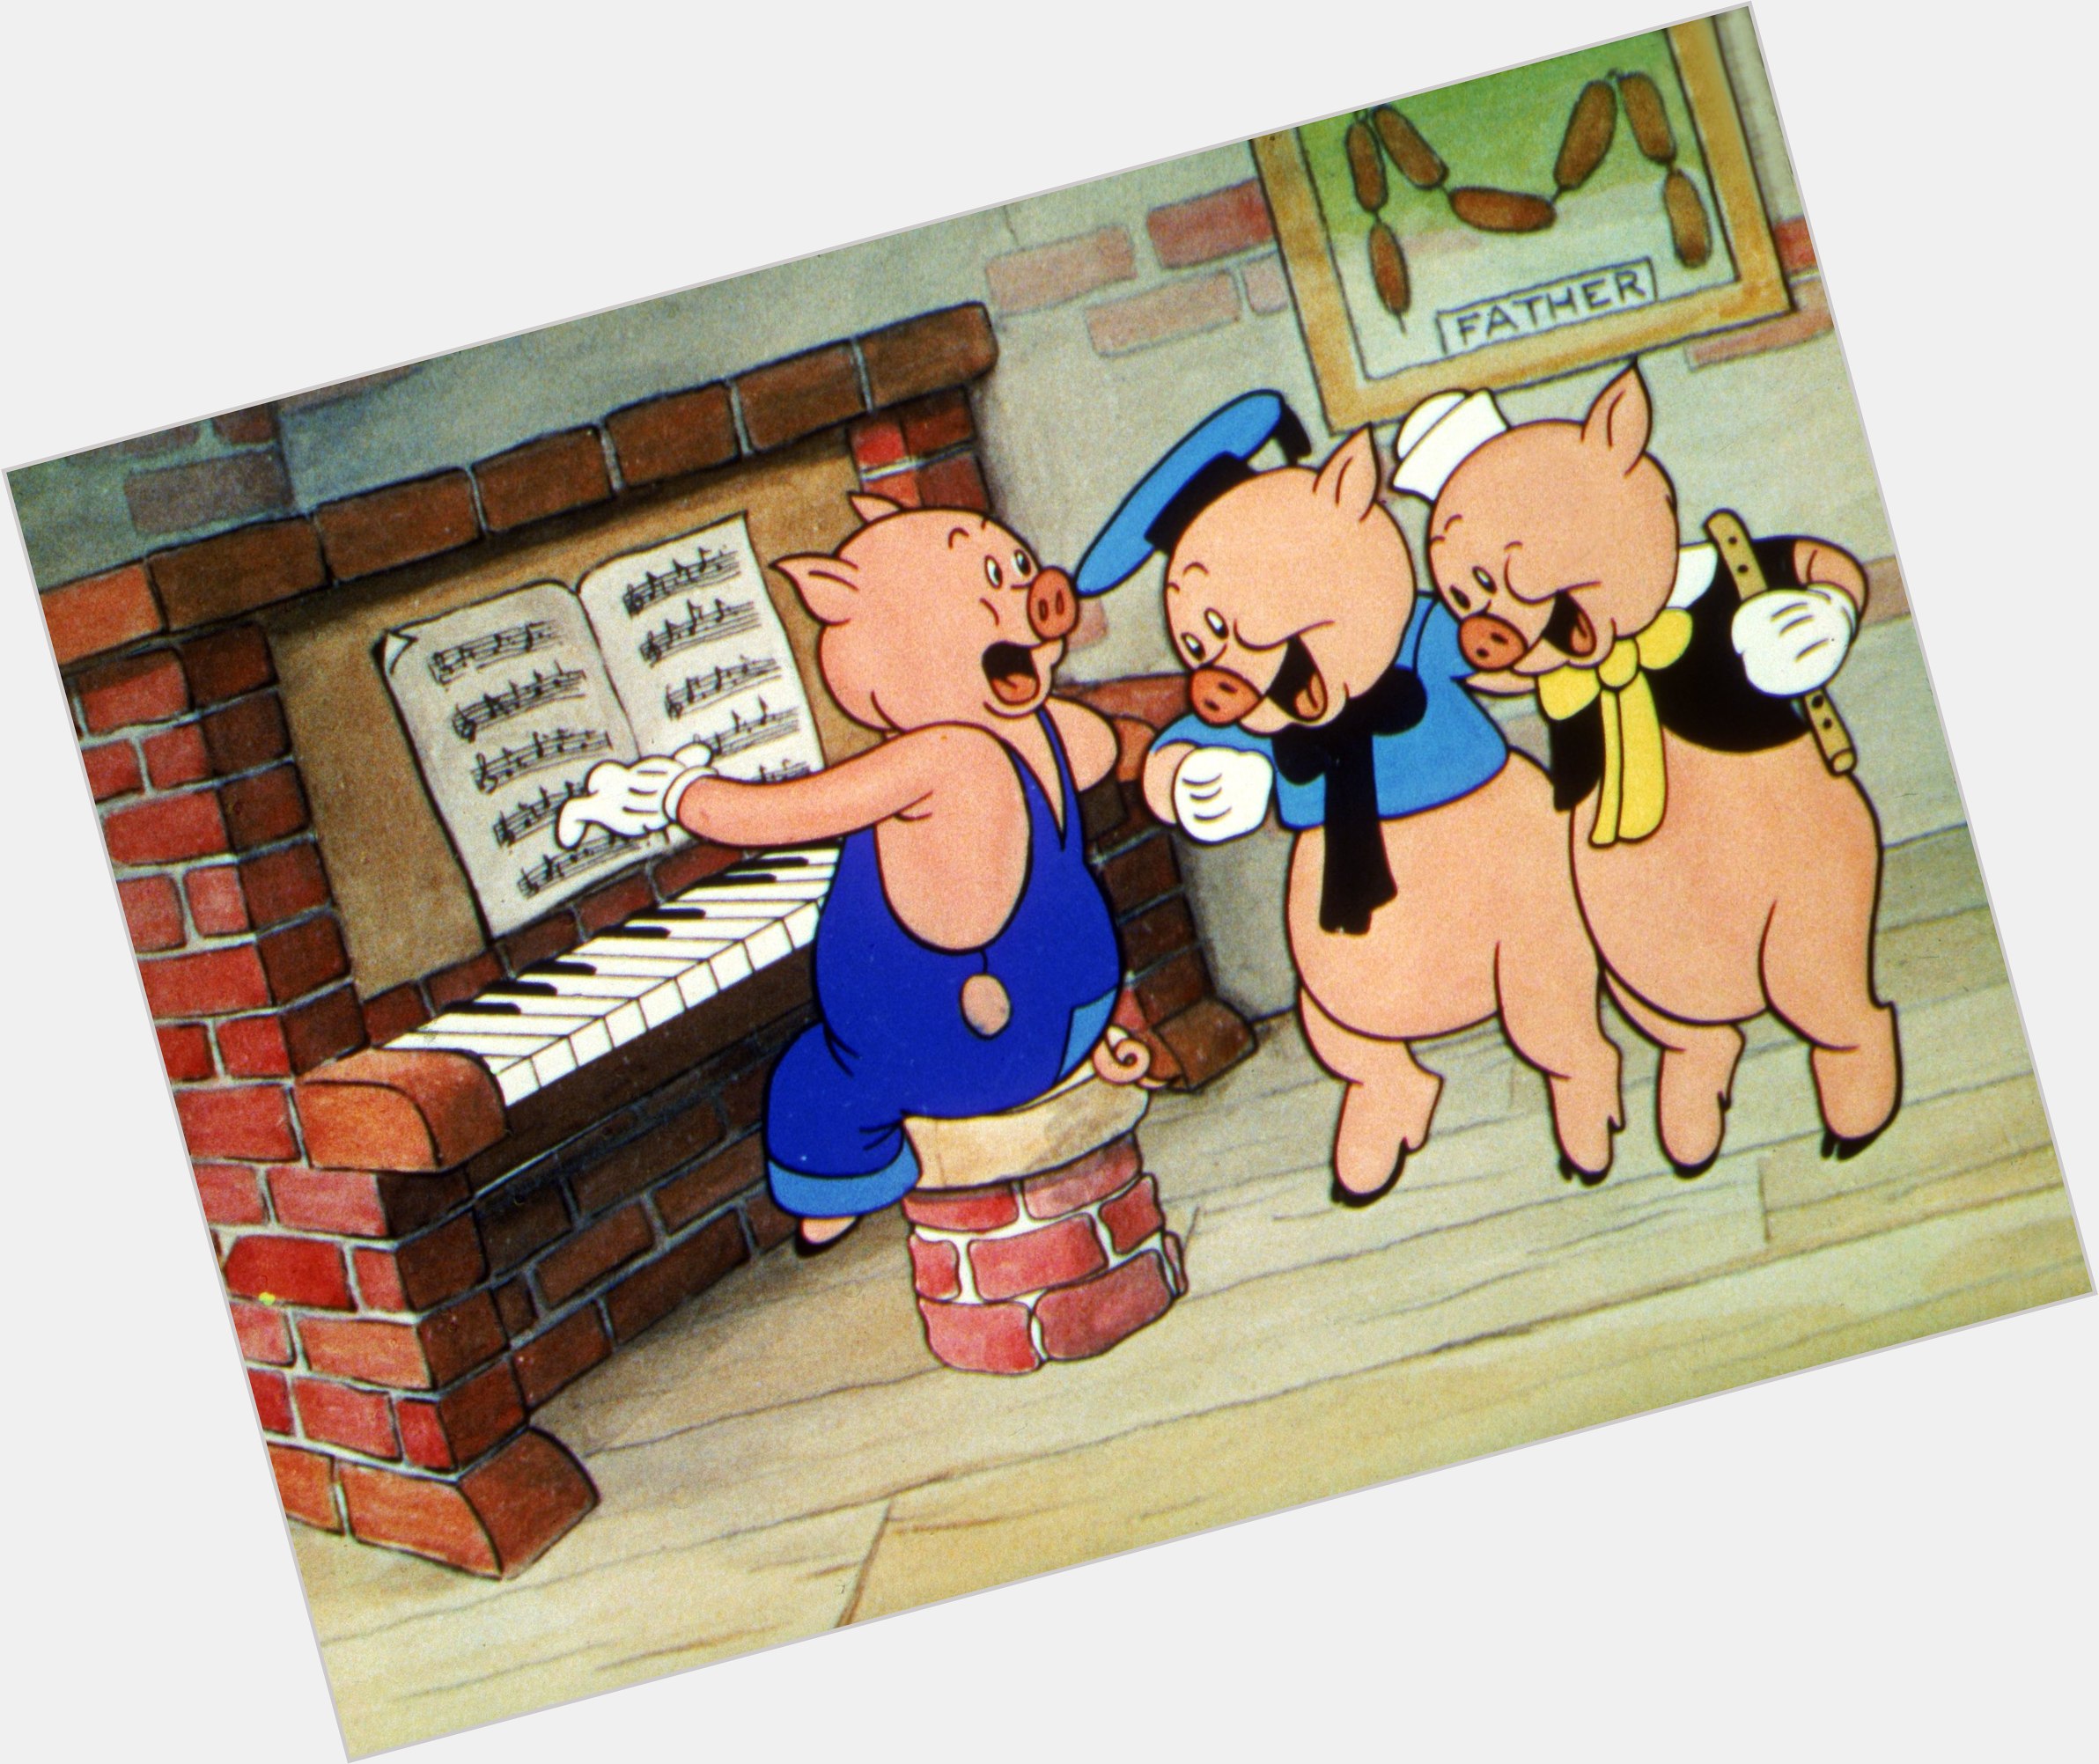 <a href="/hot-men/the-three-little-pigs/where-dating-news-photos">The Three Little Pigs</a>  